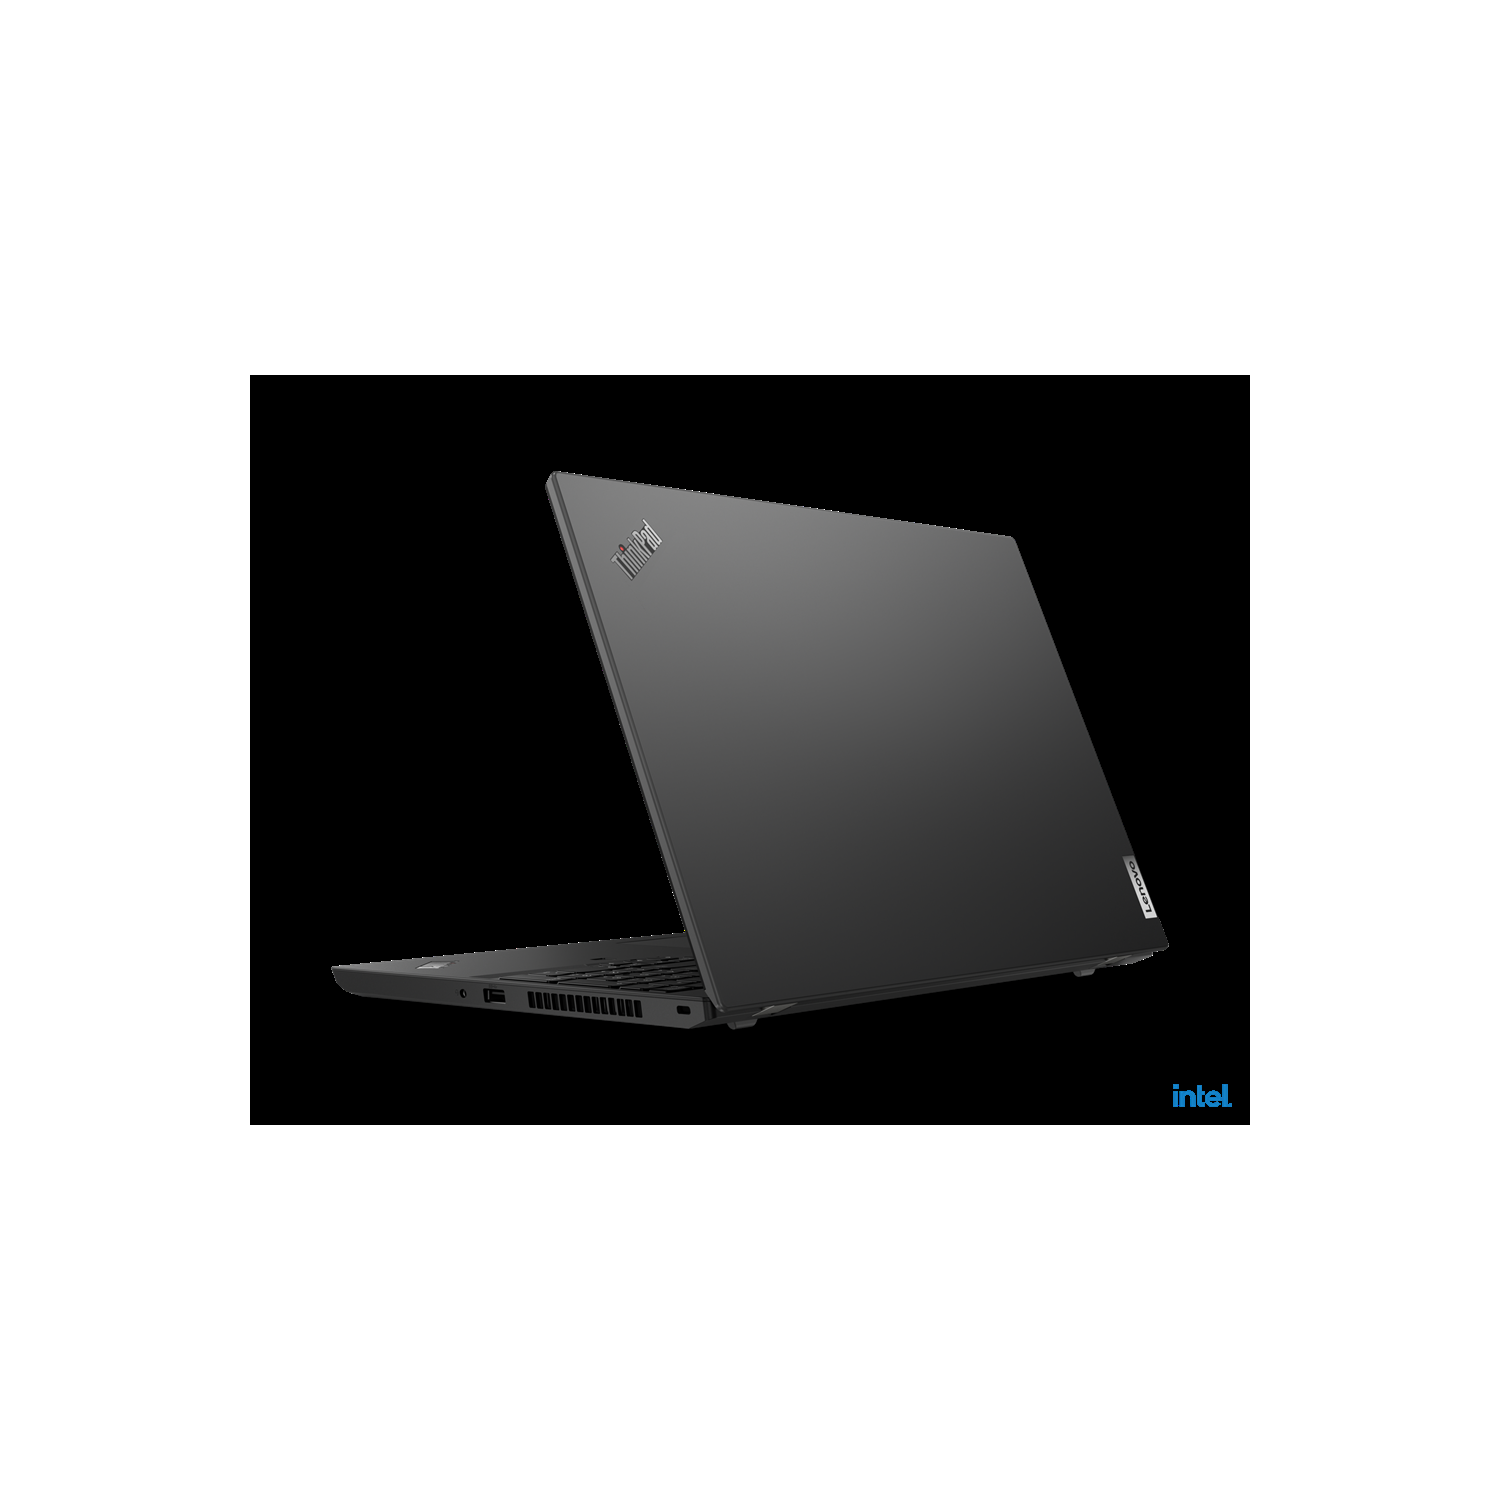 Lenovo ThinkPad L15 Gen 2 15.6" Laptop-Black (Intel Core i7-1165G7/256 GB SSD/16 GB RAM/Windows 10)-English (20X300HCUS)